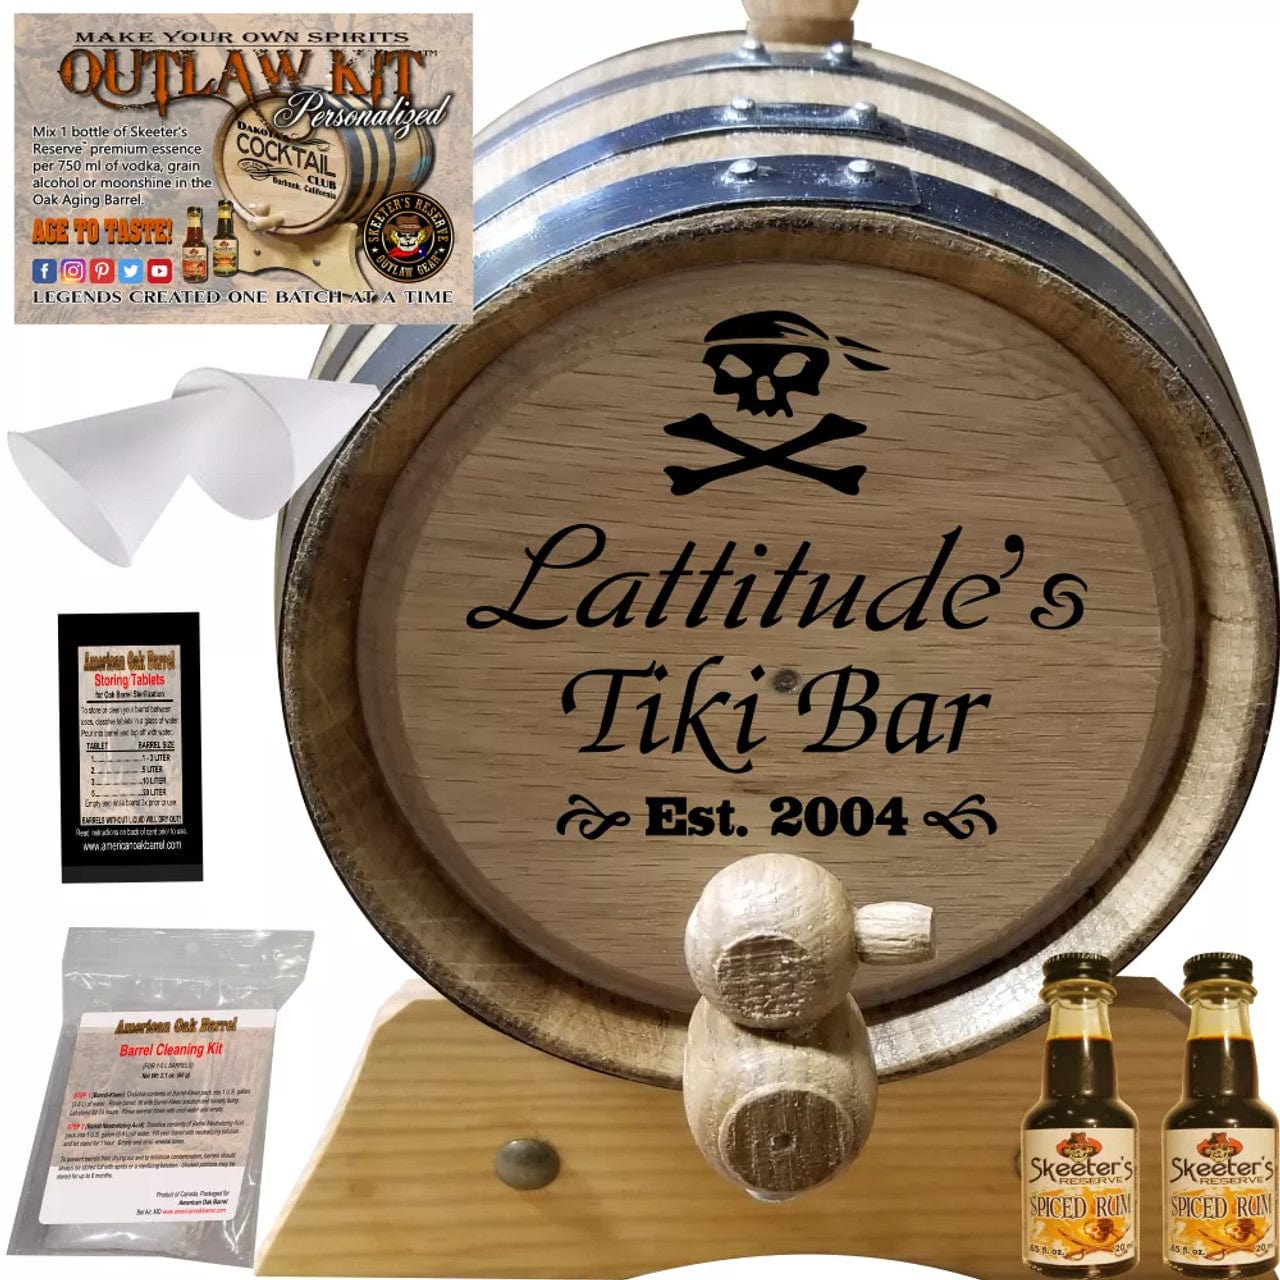 American Oak Barrel Outlaw Kits 1 Liter (.26 gallon) / Dark Jamaican Rum American Oak Barrel Personalized Outlaw Kit™ (026) Pirate Tiki Bar - Create Your Own Spirits